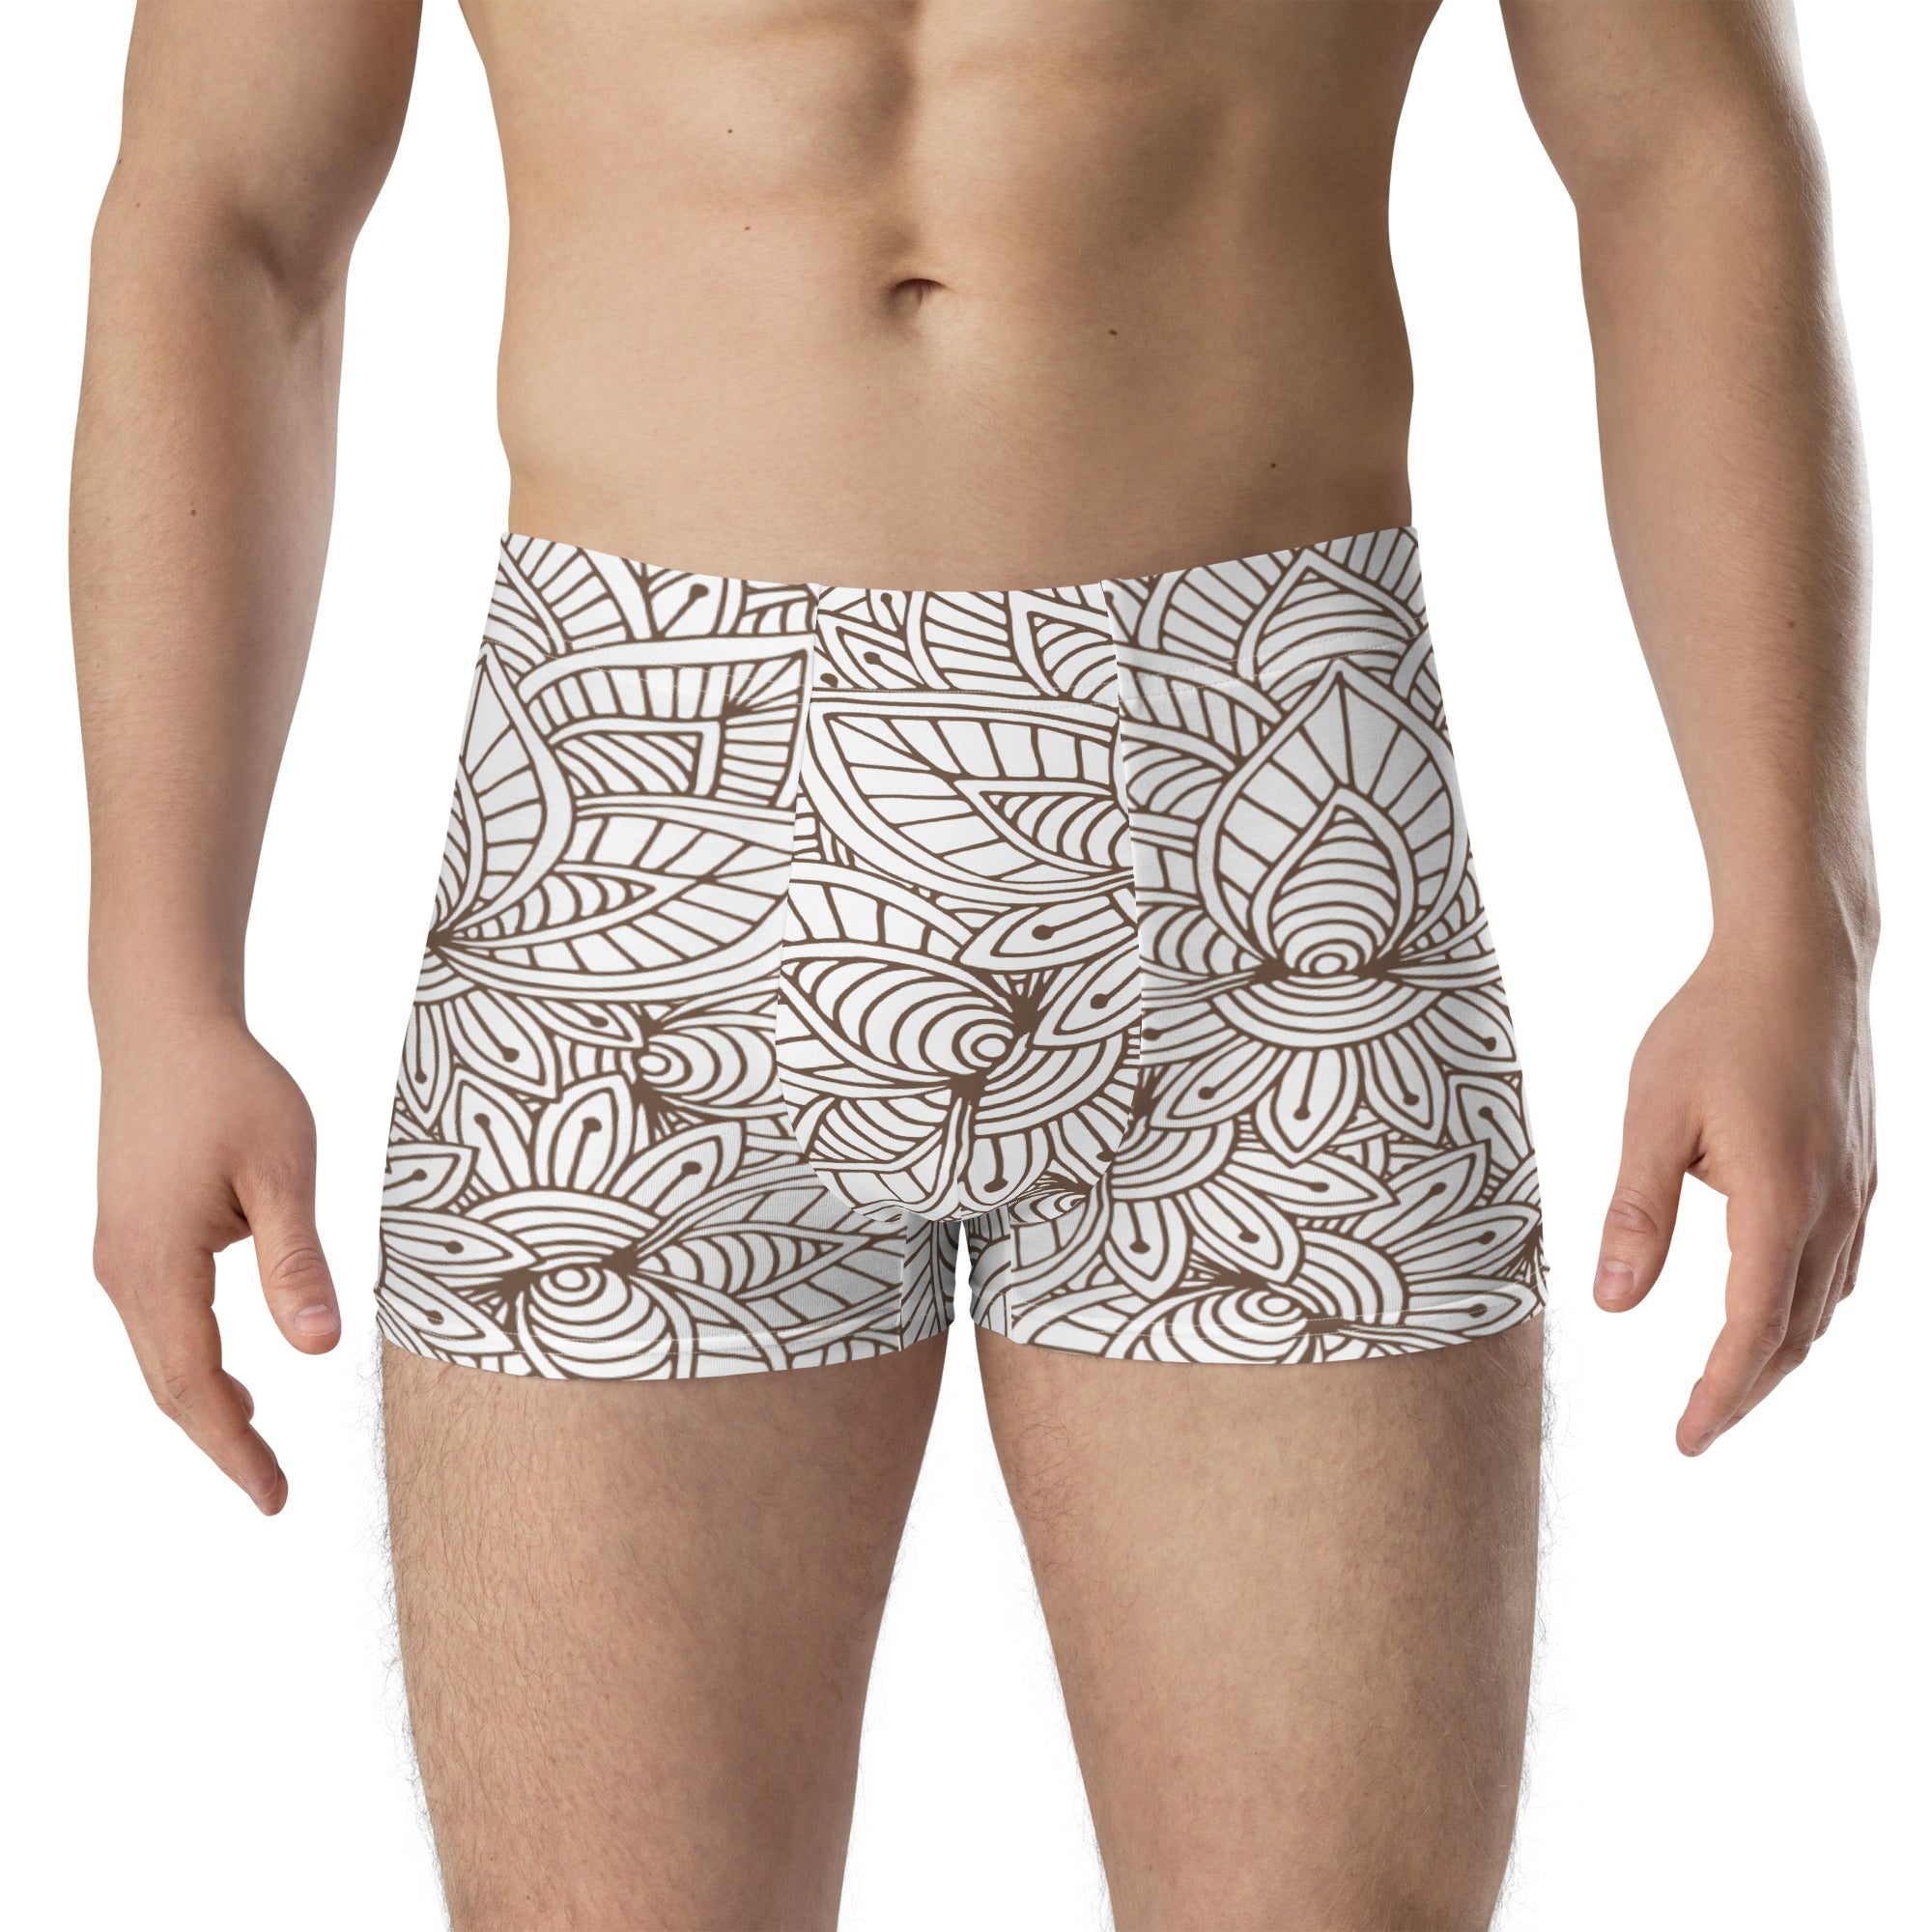 Trendy white floral print boxer briefs for men